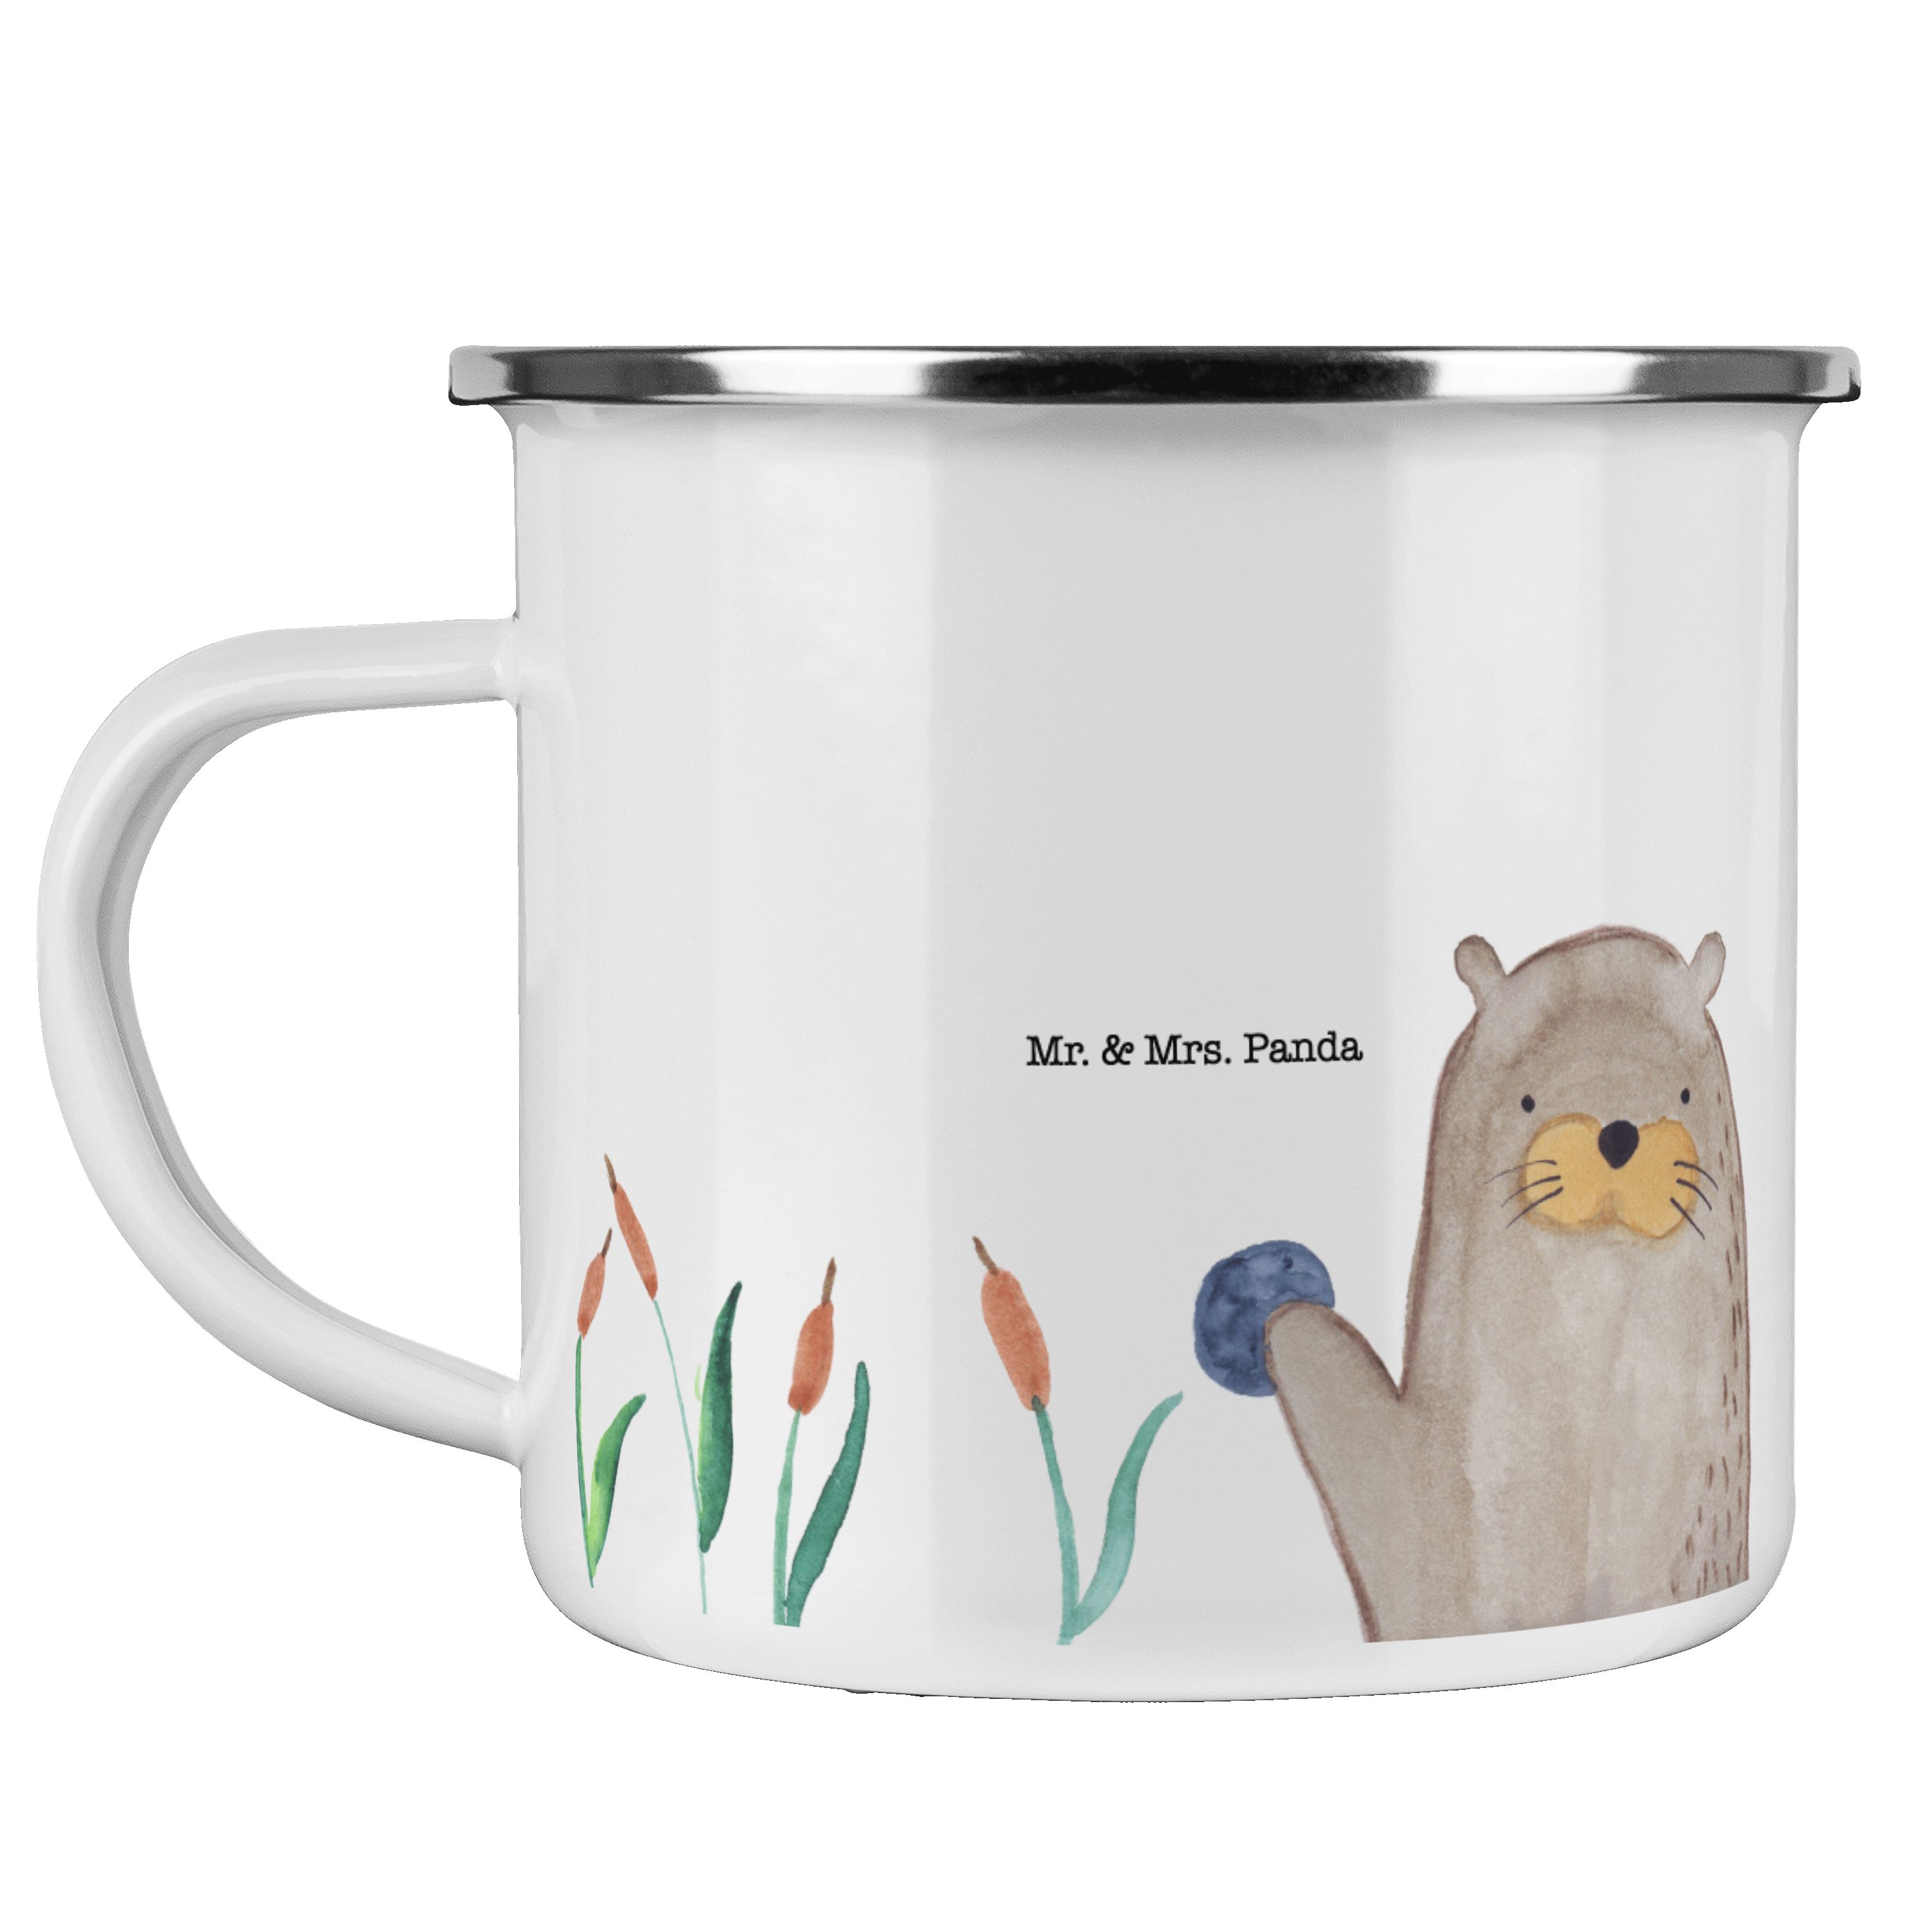 Mr. & Mrs. Panda Becher Otter mit Stein - Weiß - Geschenk, Kaffee Blechtasse, Trinkbecher, Fi, Emaille